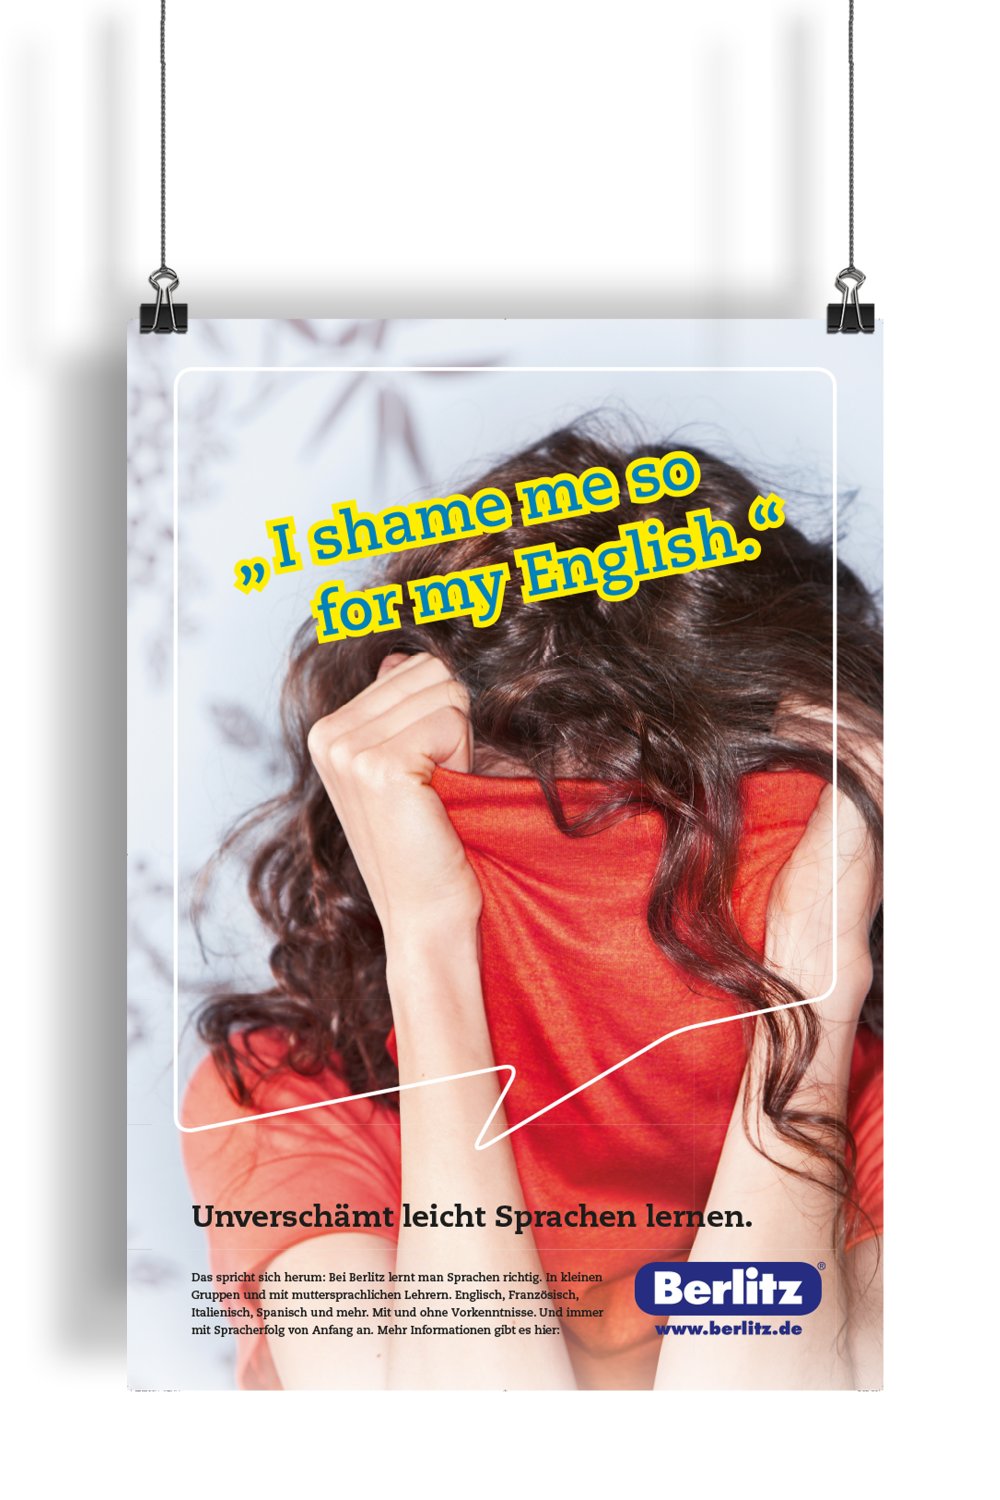 Berlitz Plakat Frau zieht Shirt übers Gesicht; Schriftzug "I shame me so for my English."